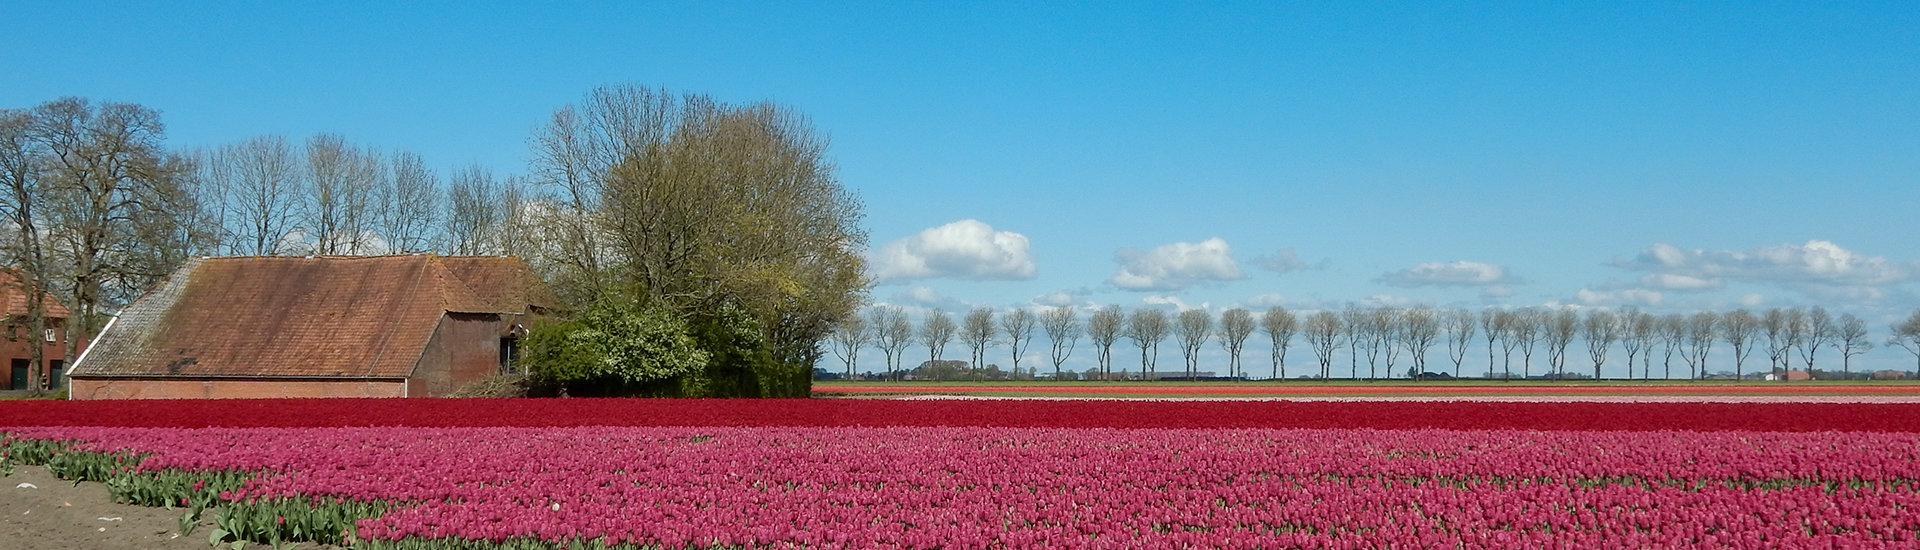 Tulpenveld met boerderij